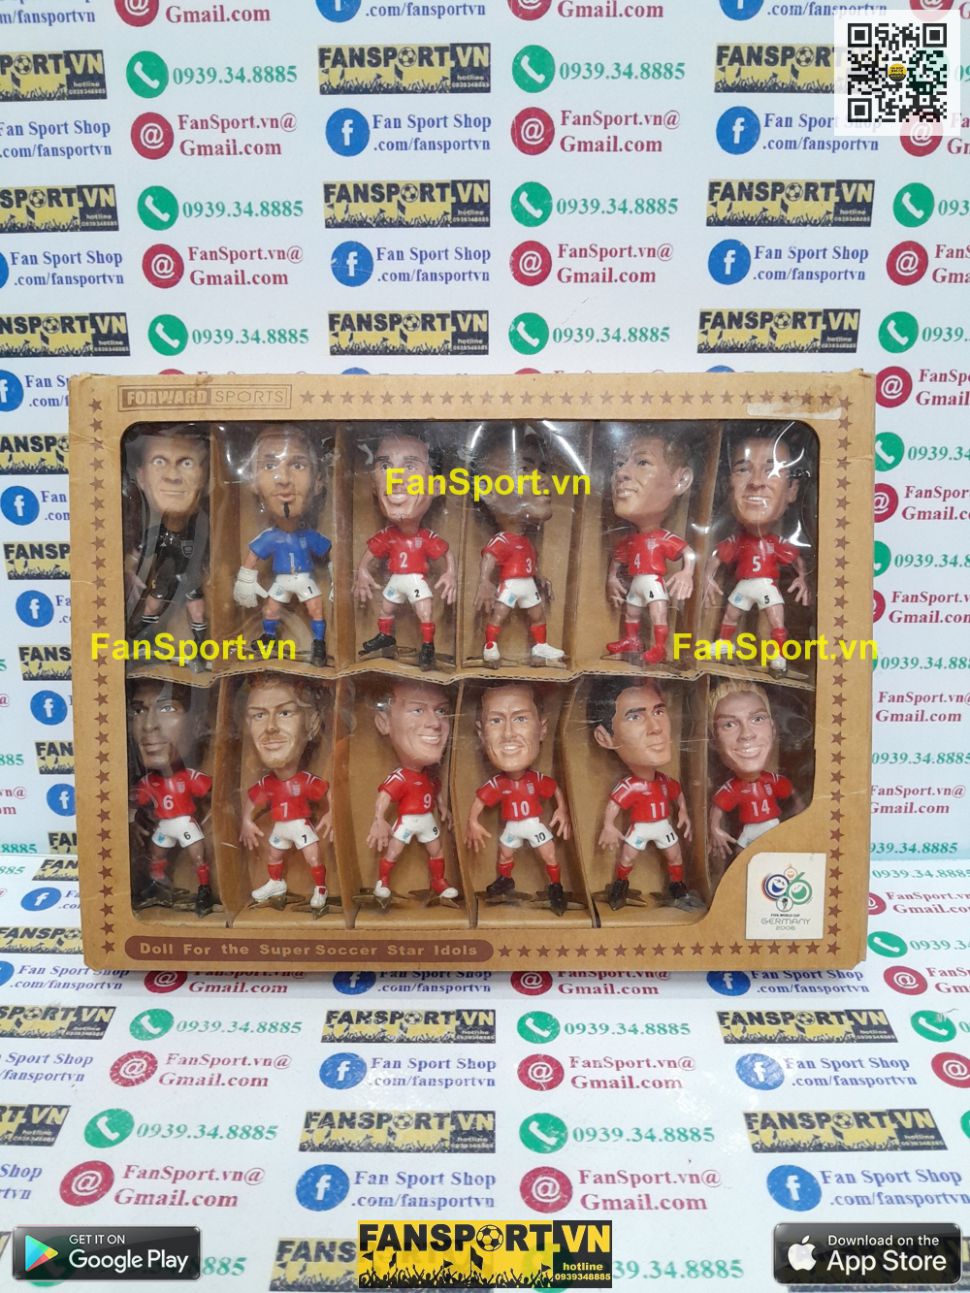 Box England Super Soccer Star Idols dolls 2004 2005 2006 away red